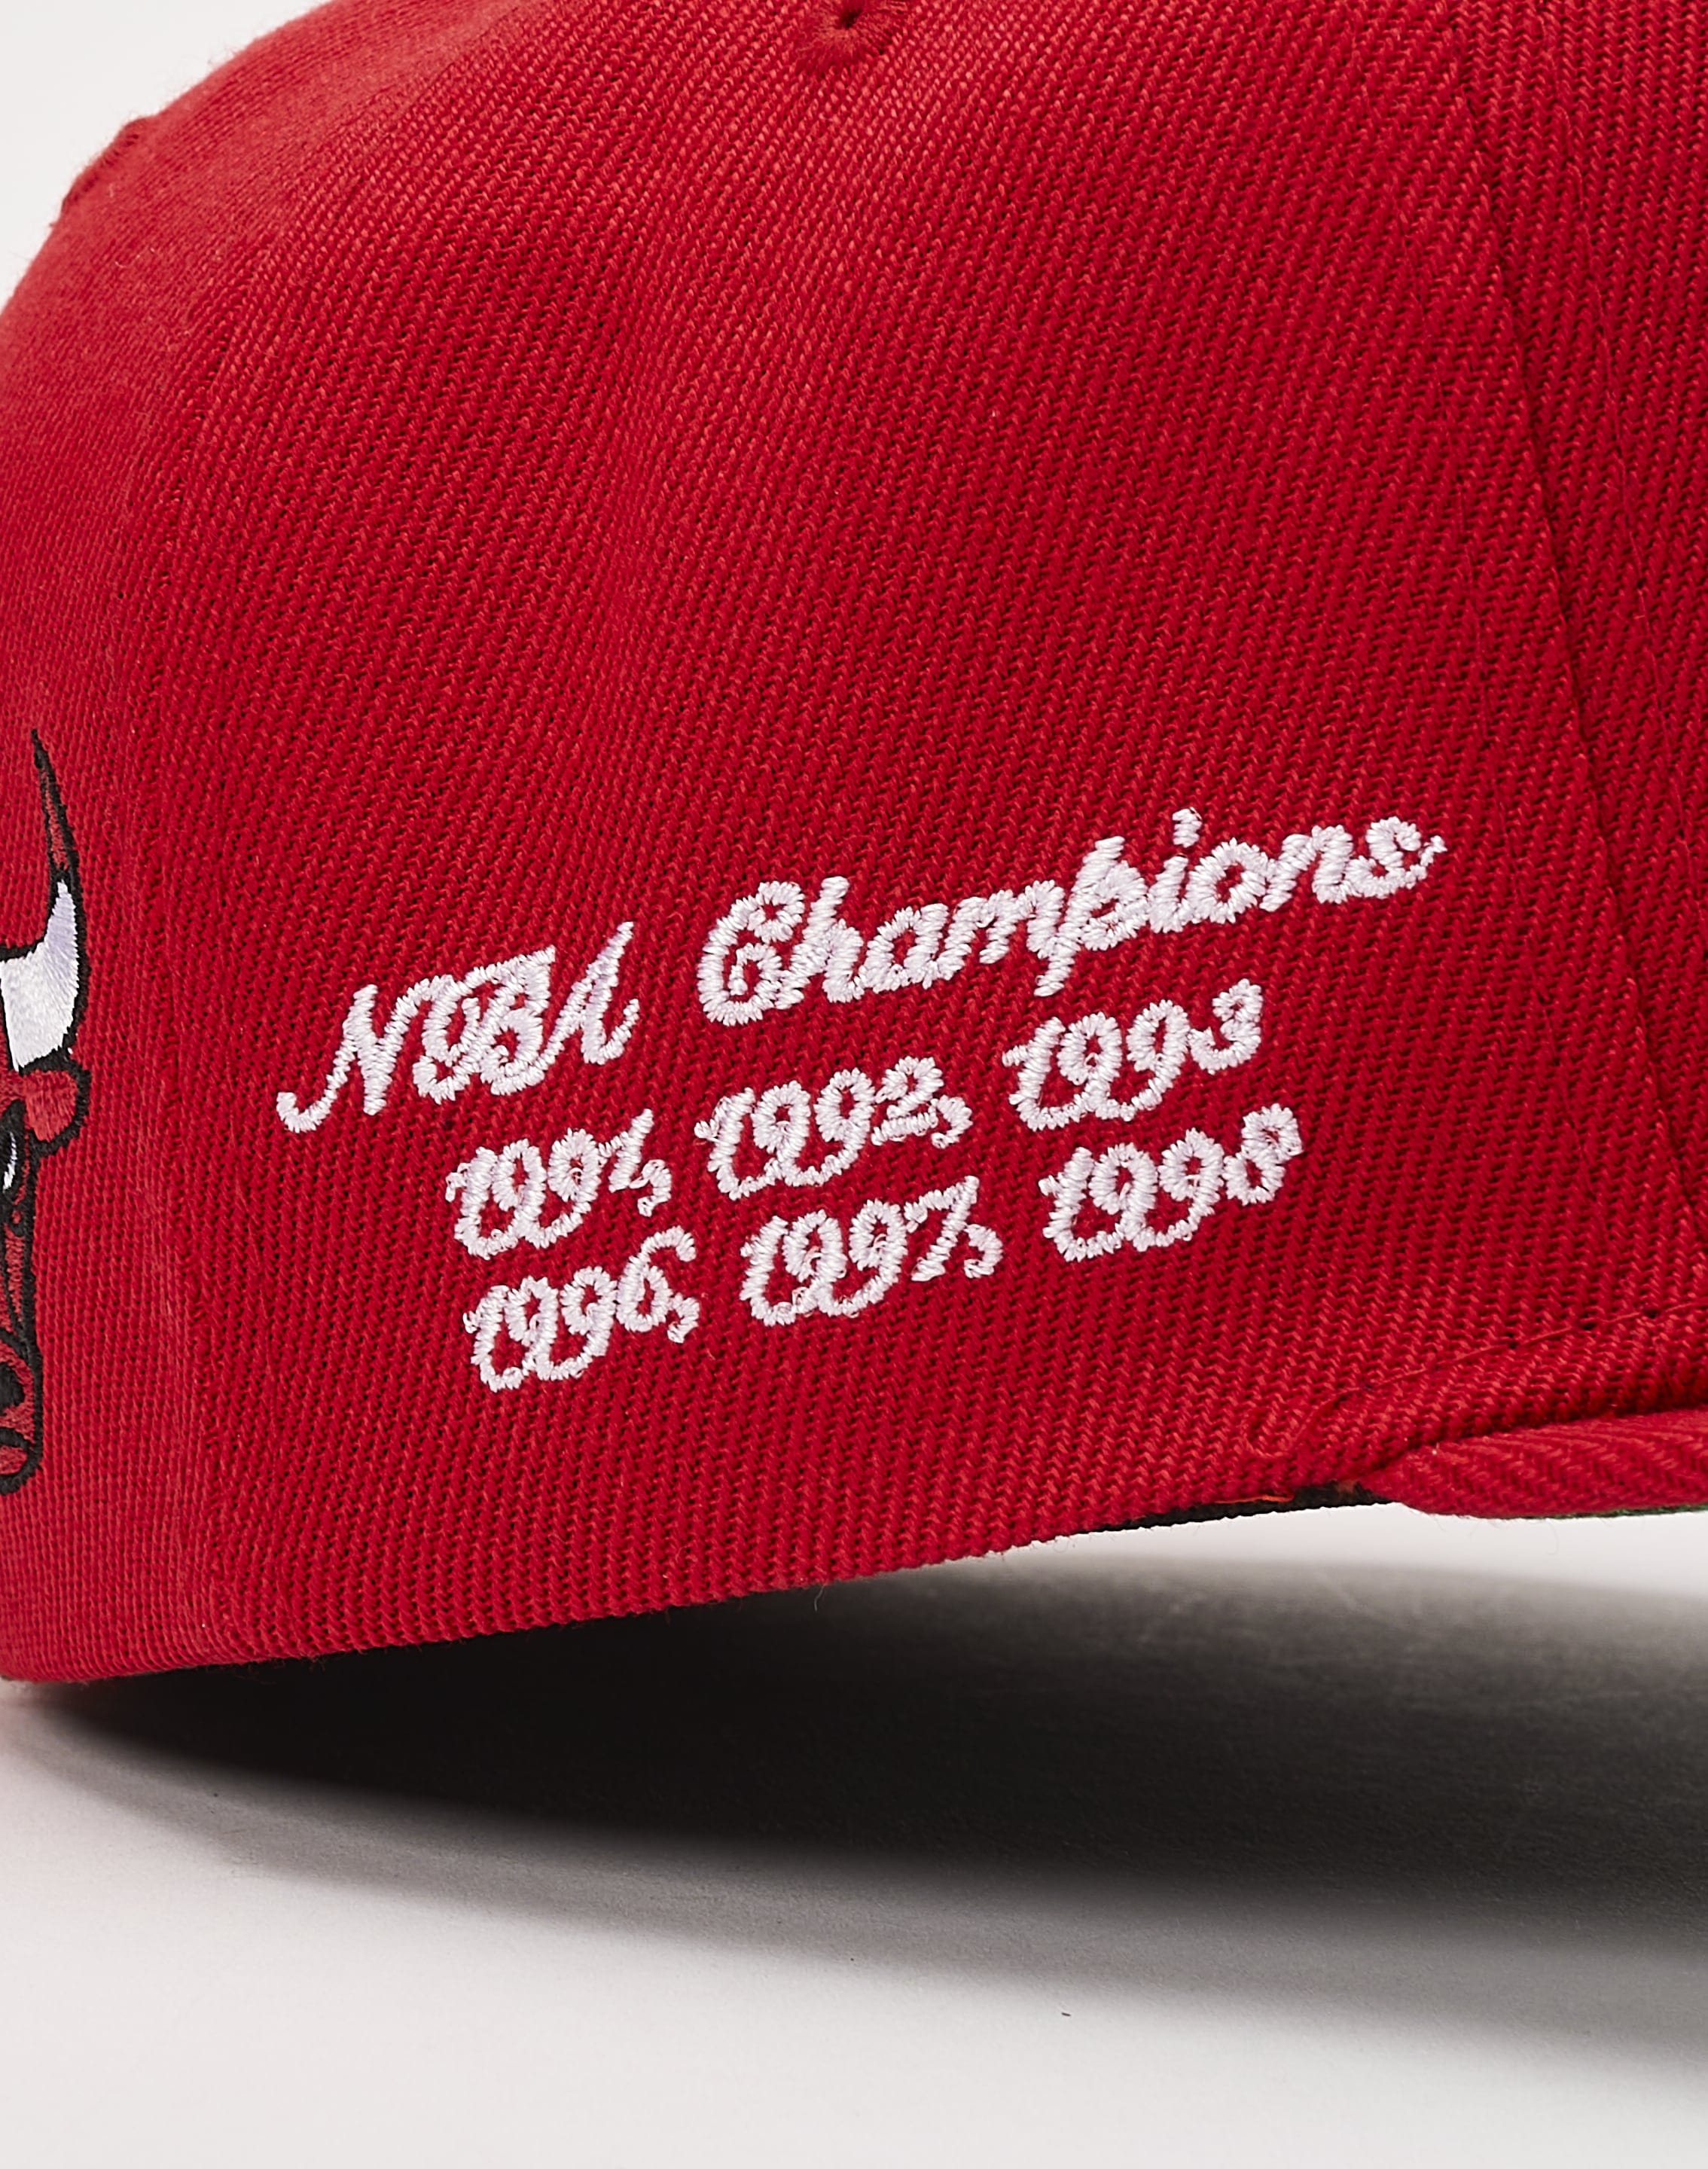 Chicago Bulls Men’s Mitchell & Ness 1996 NBA Finals Snapback Hat